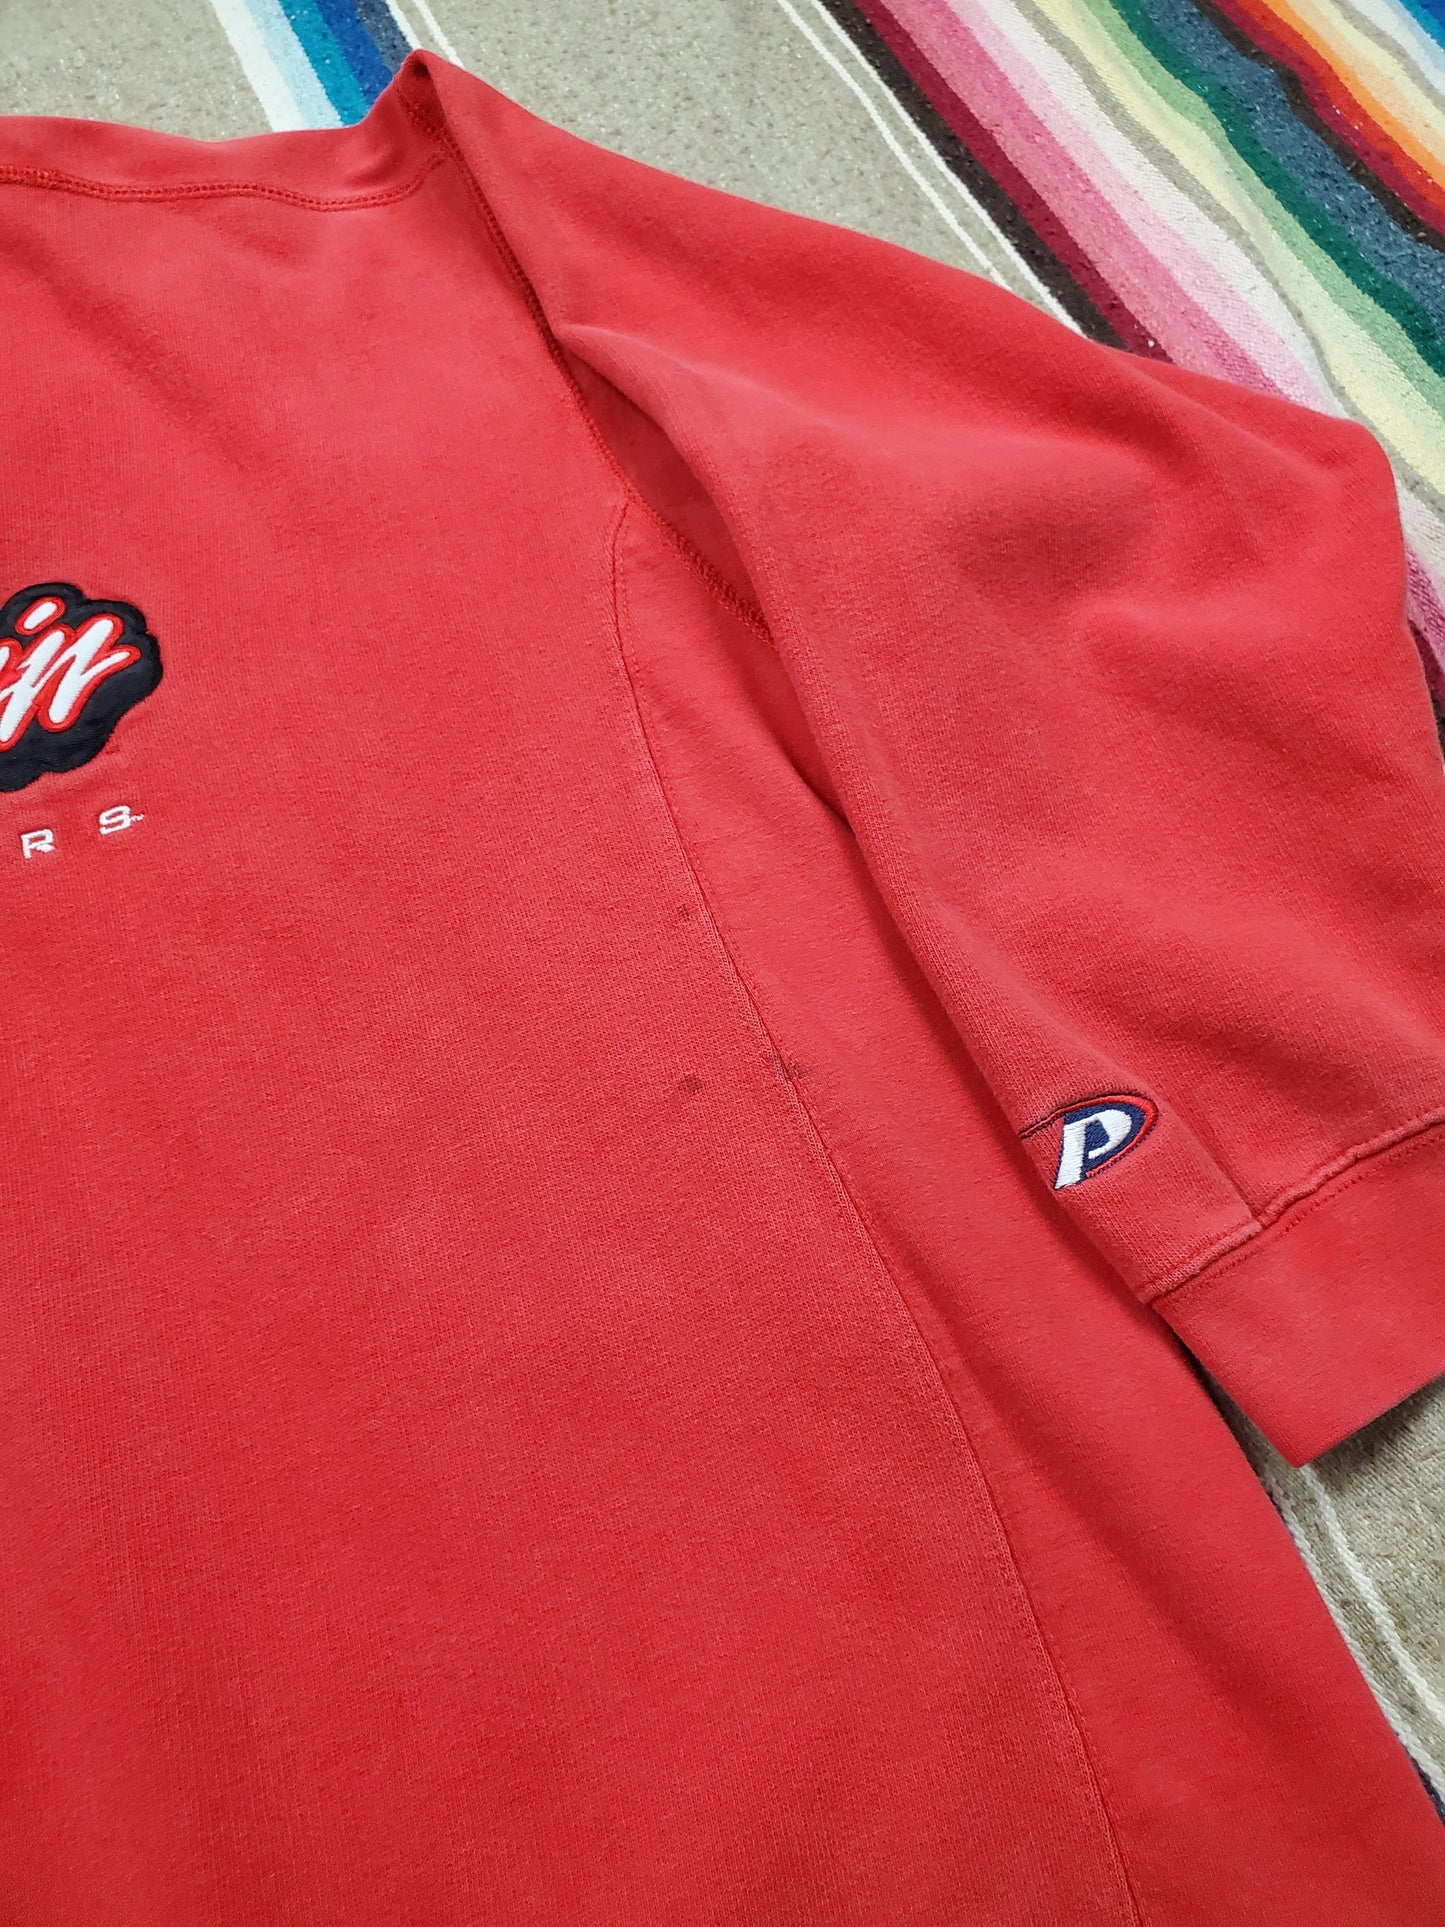 1990s/2000s Pro Player University of Wisconsin Badgers Reverse Weave Style Sweatshirt Size XL/XXL